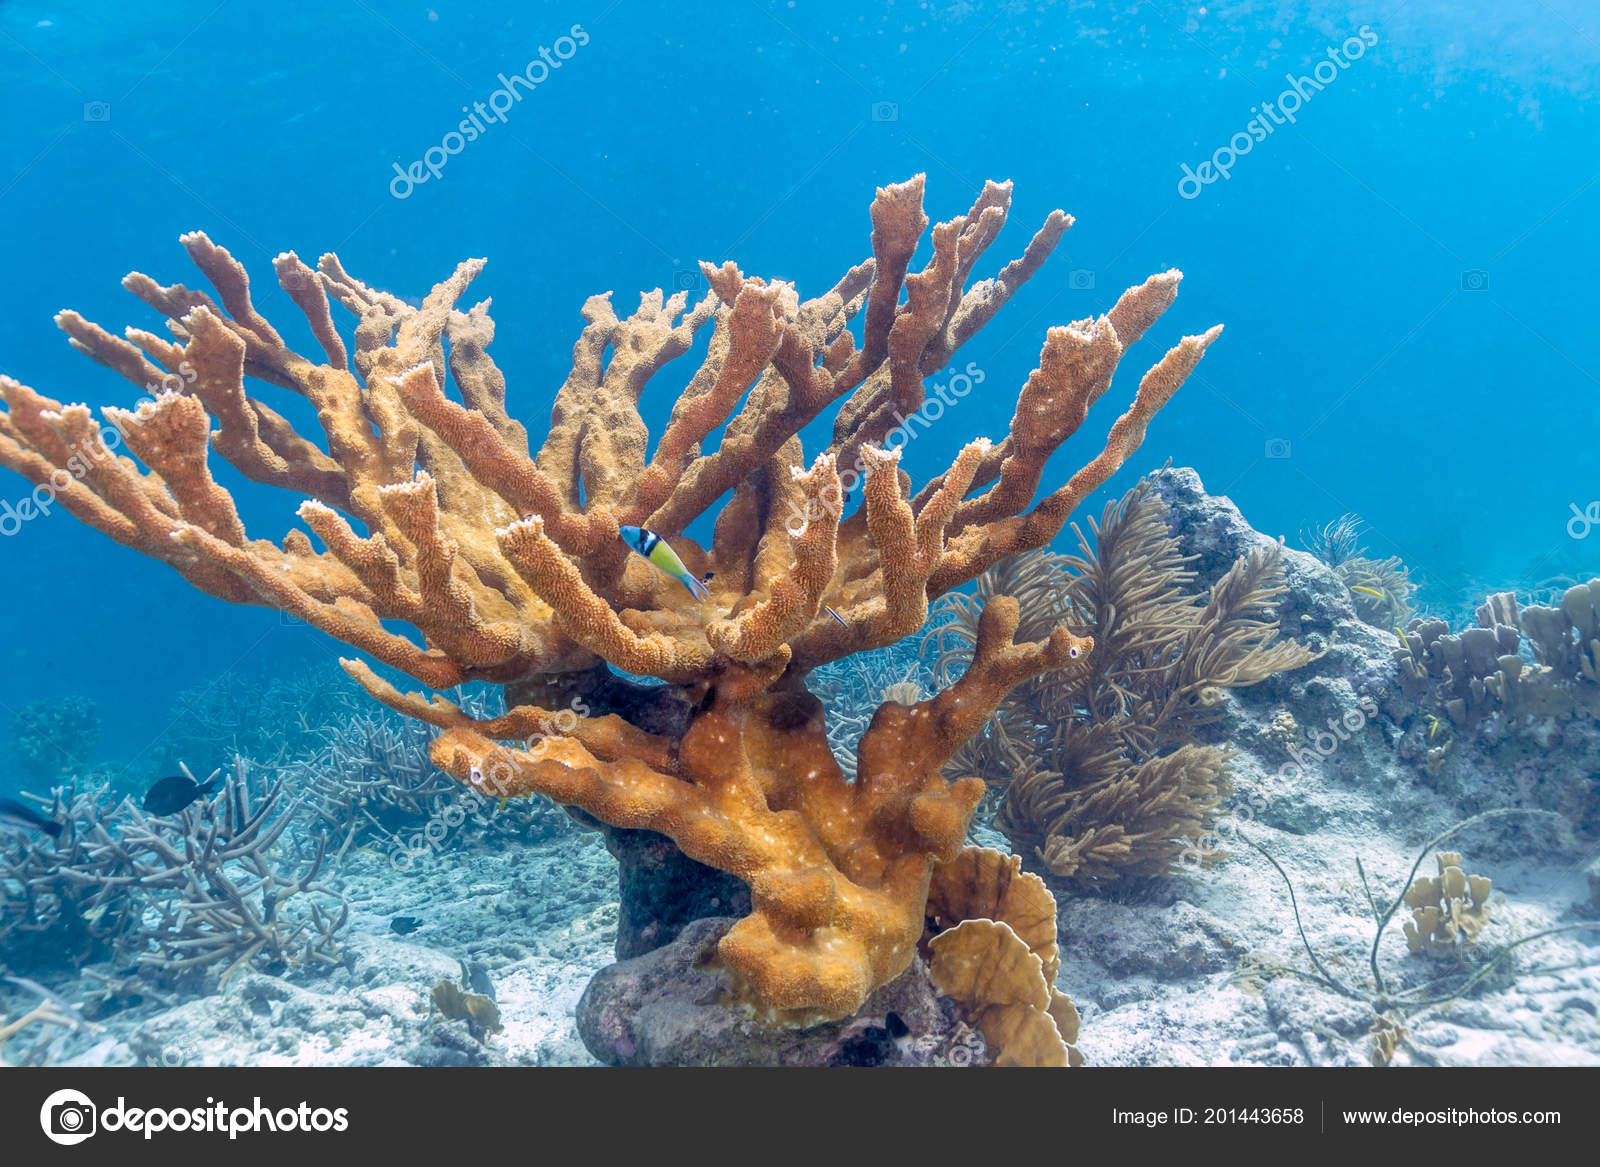 https://st4.depositphotos.com/1729435/20144/i/1600/depositphotos_201443658-stock-photo-elkhorn-coral-acropora-palmata-considered.jpg